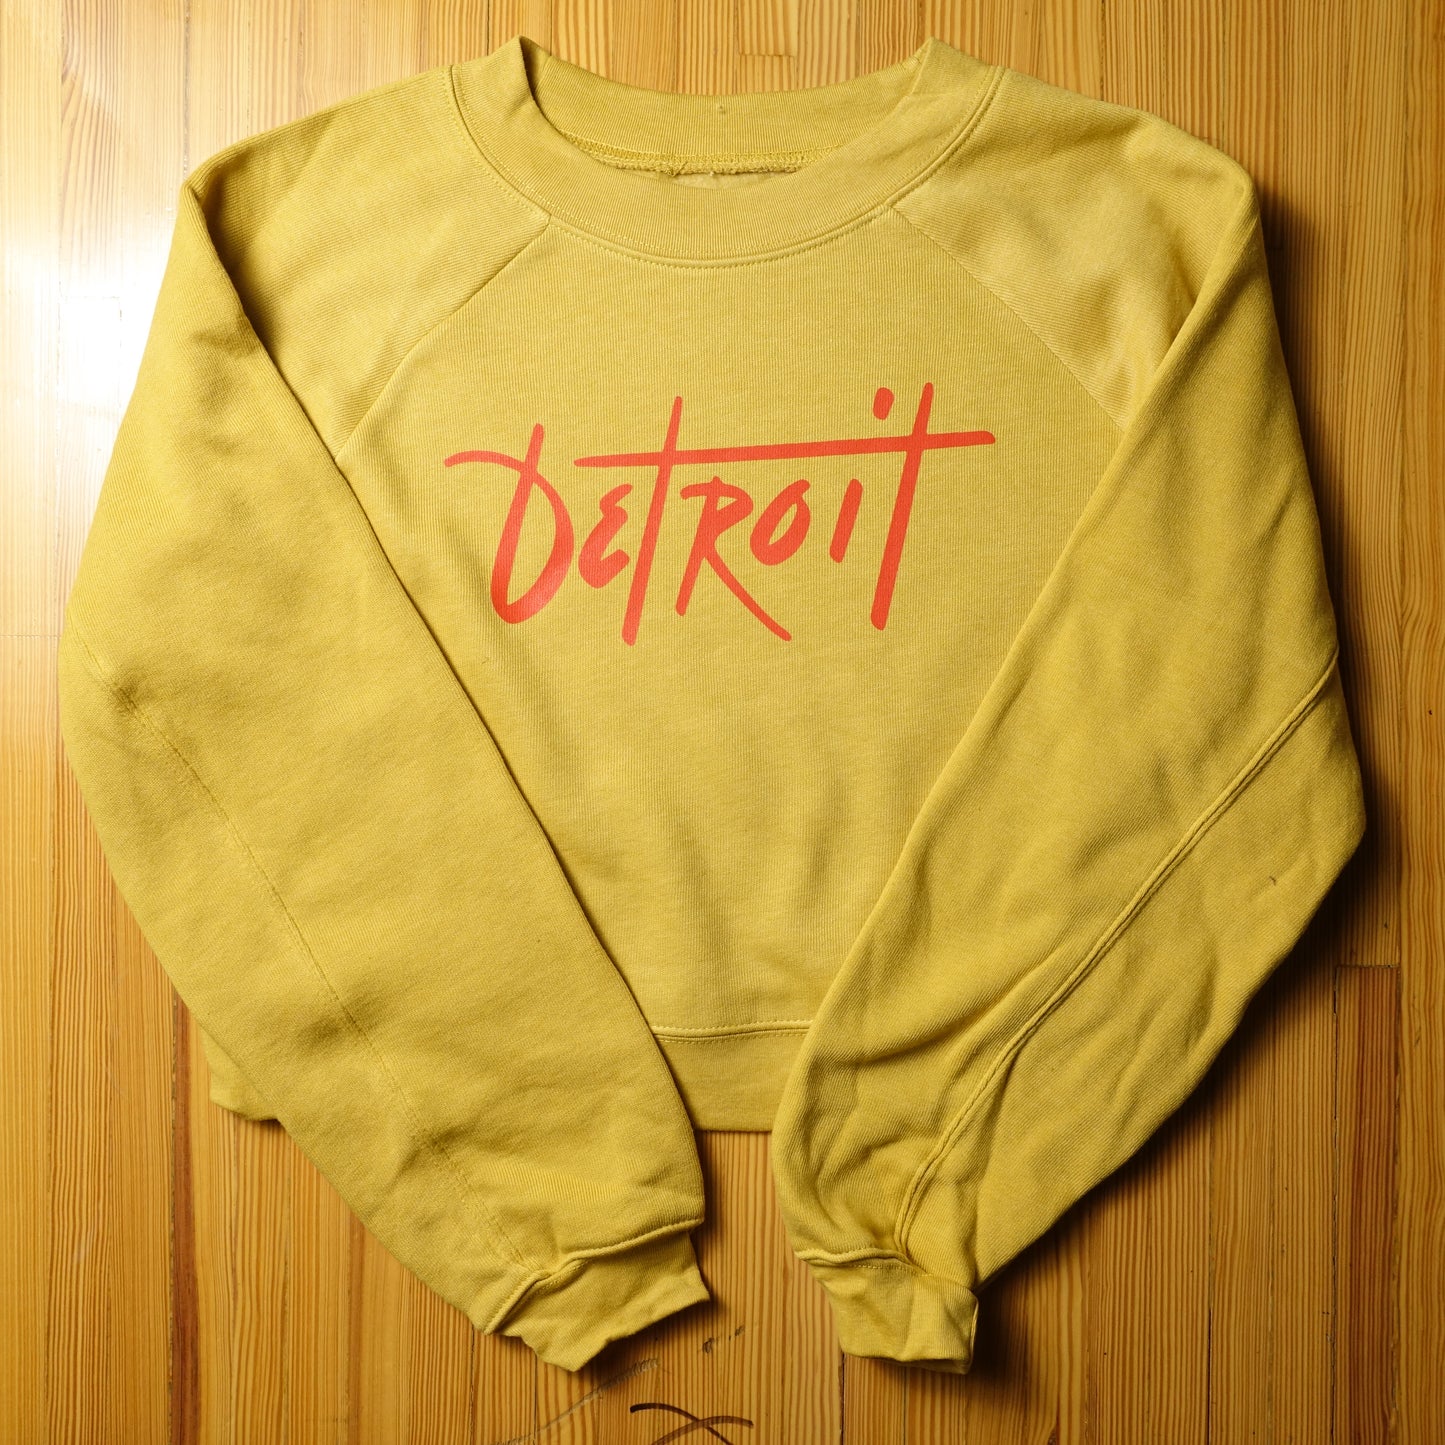 Gold Detroit raglan sweatshirt